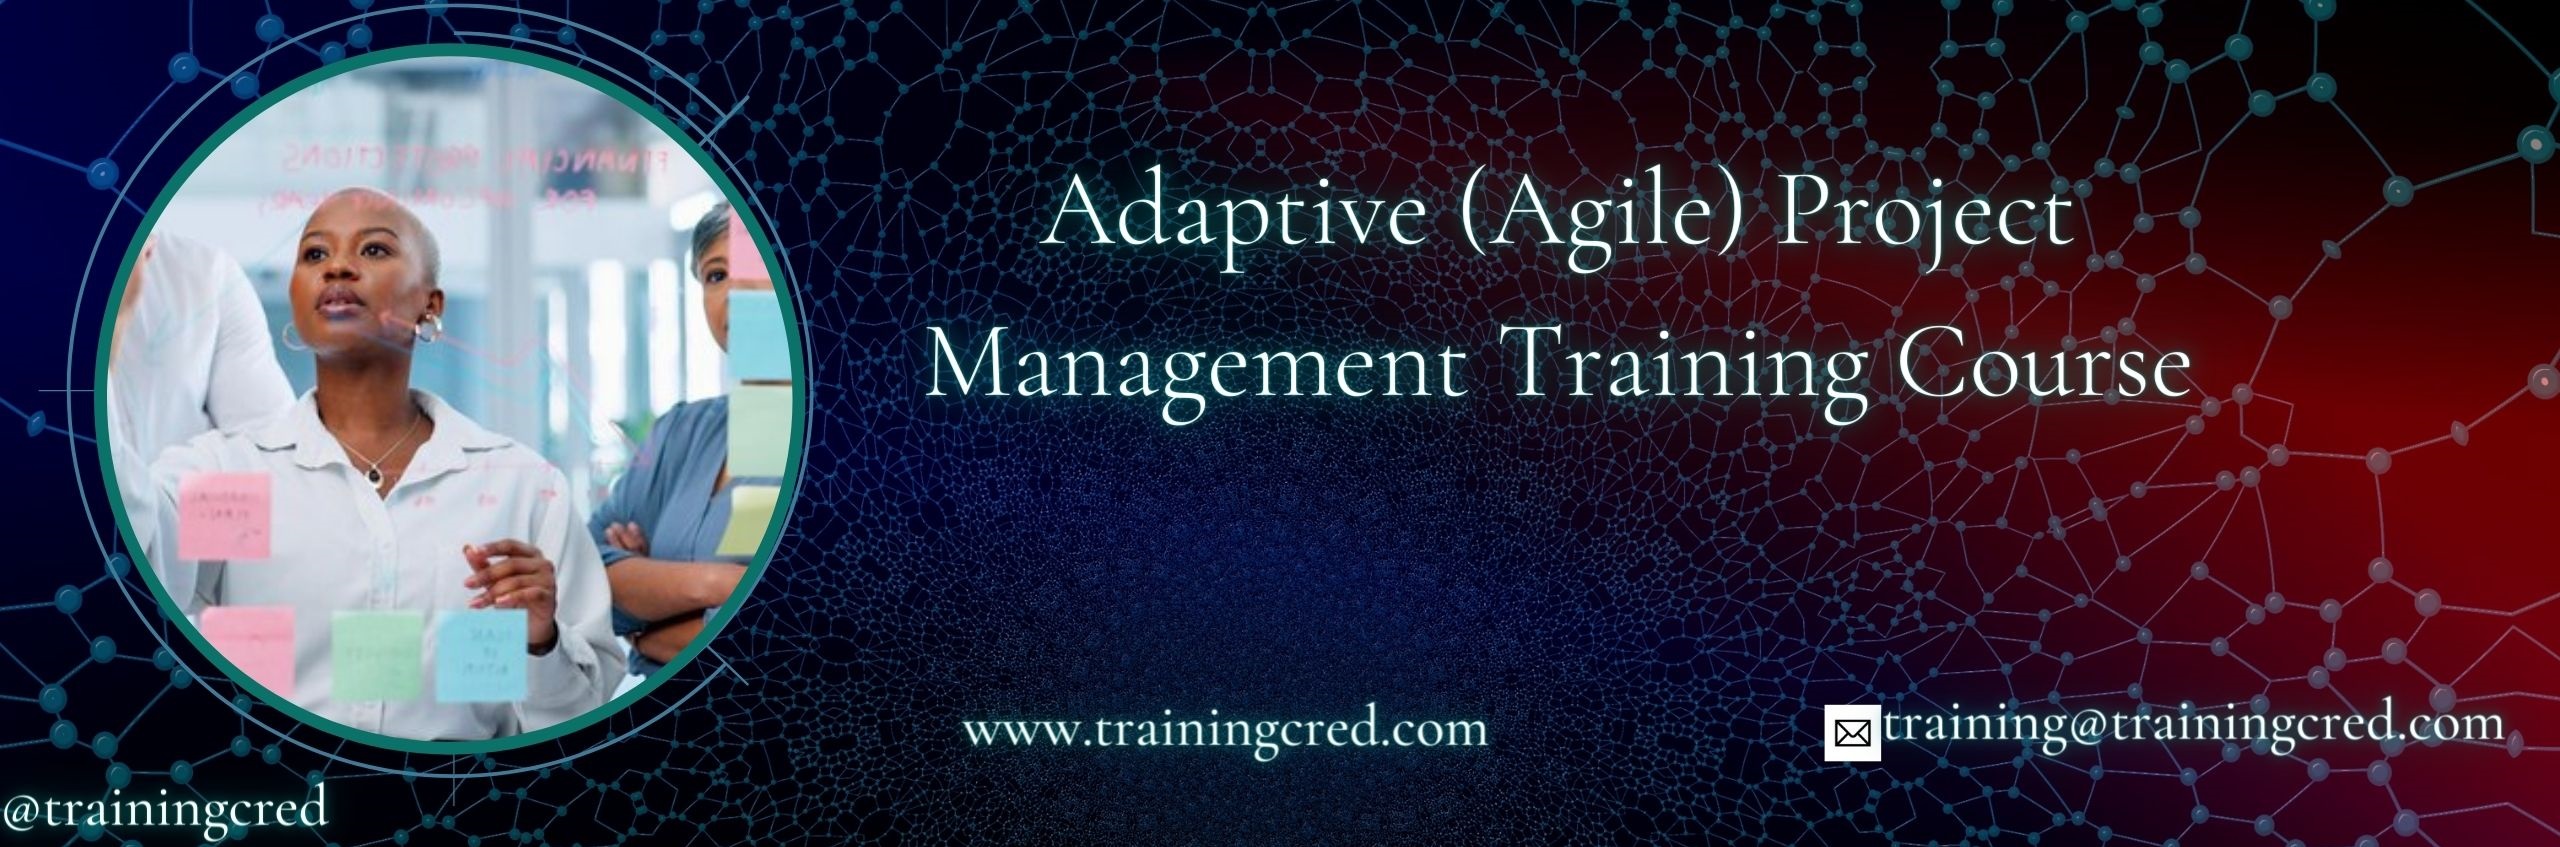 Adaptive (Agile) Project Management Training